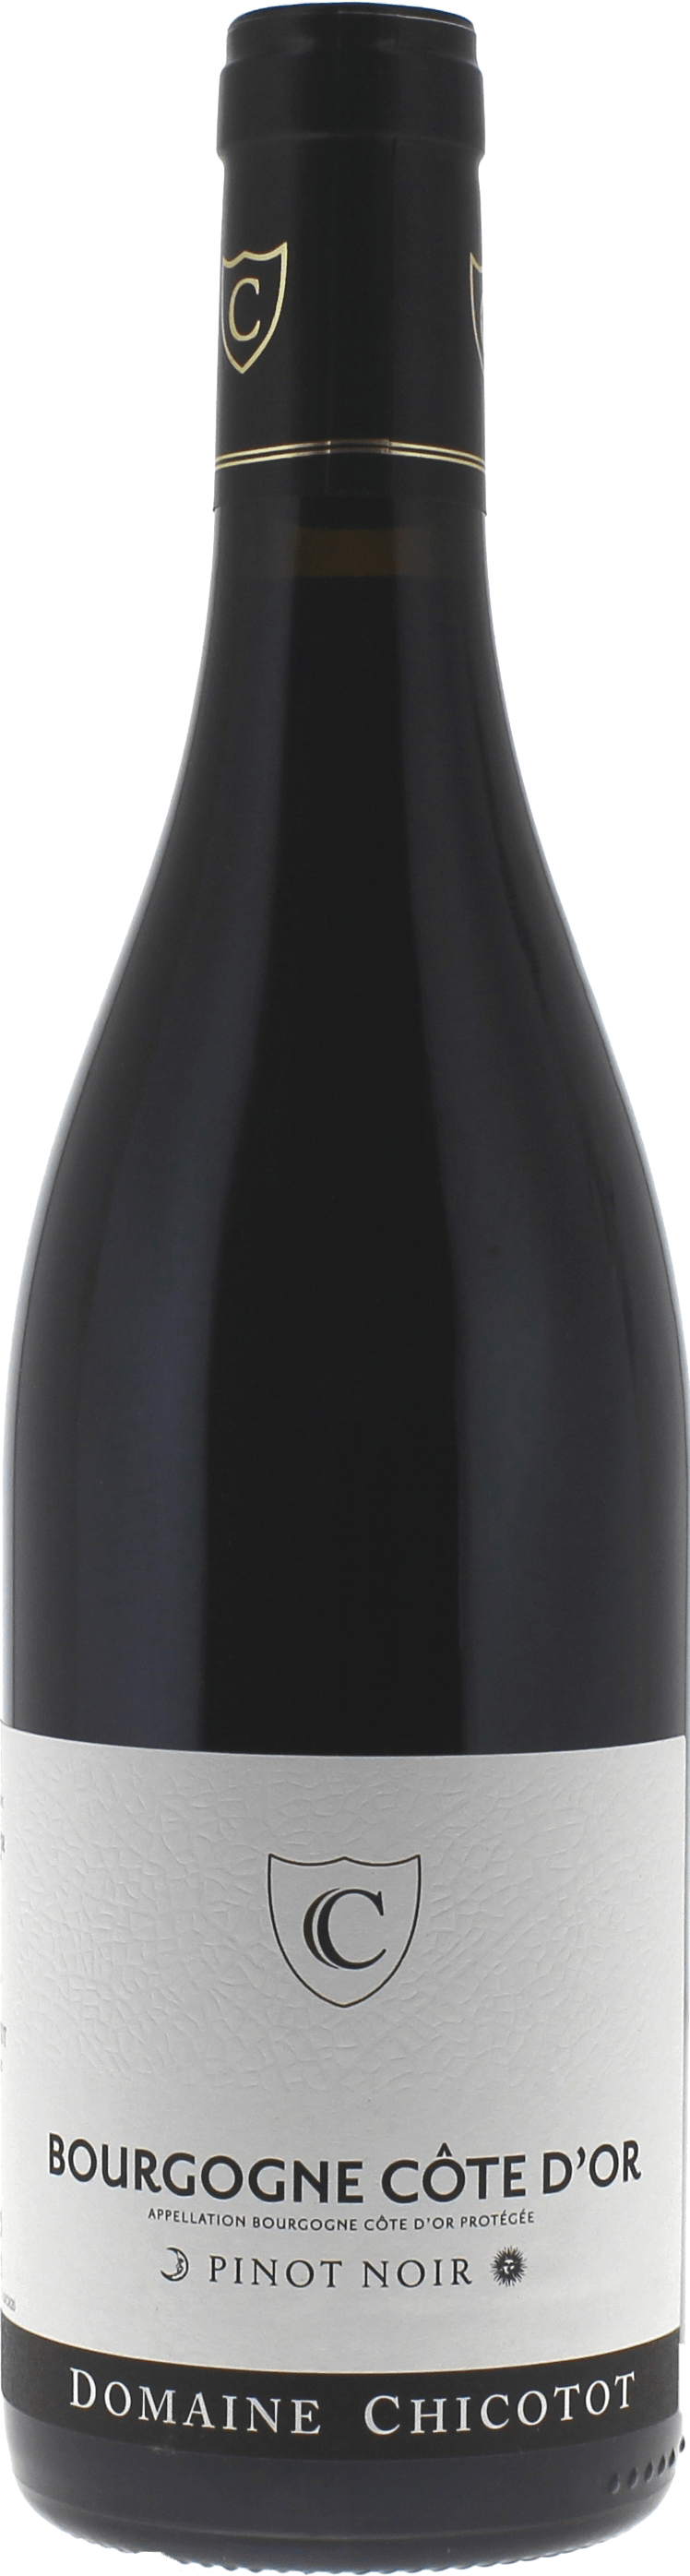 Bourgogne cote d'or pinot noir 2021 Domaine CHICOTOT, Bourgogne rouge